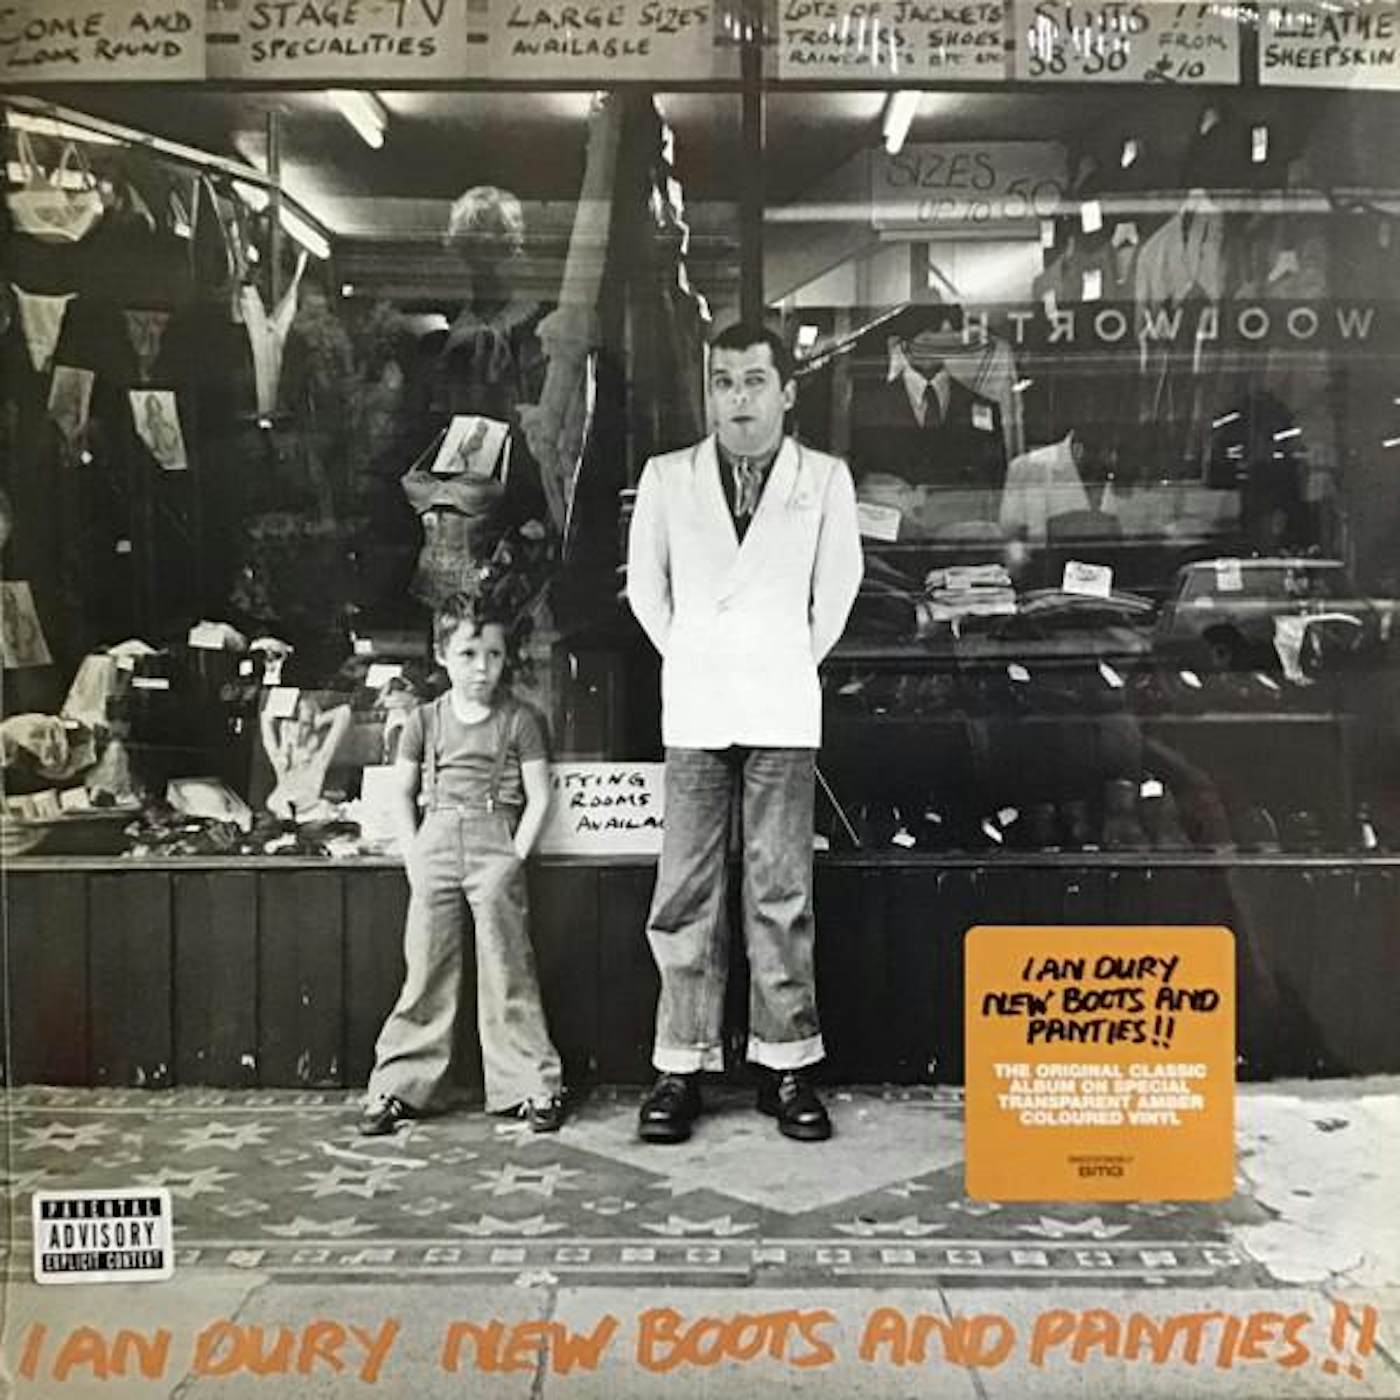 Ian Dury NEW BOOTS & PANTIES!! (X) Vinyl Record